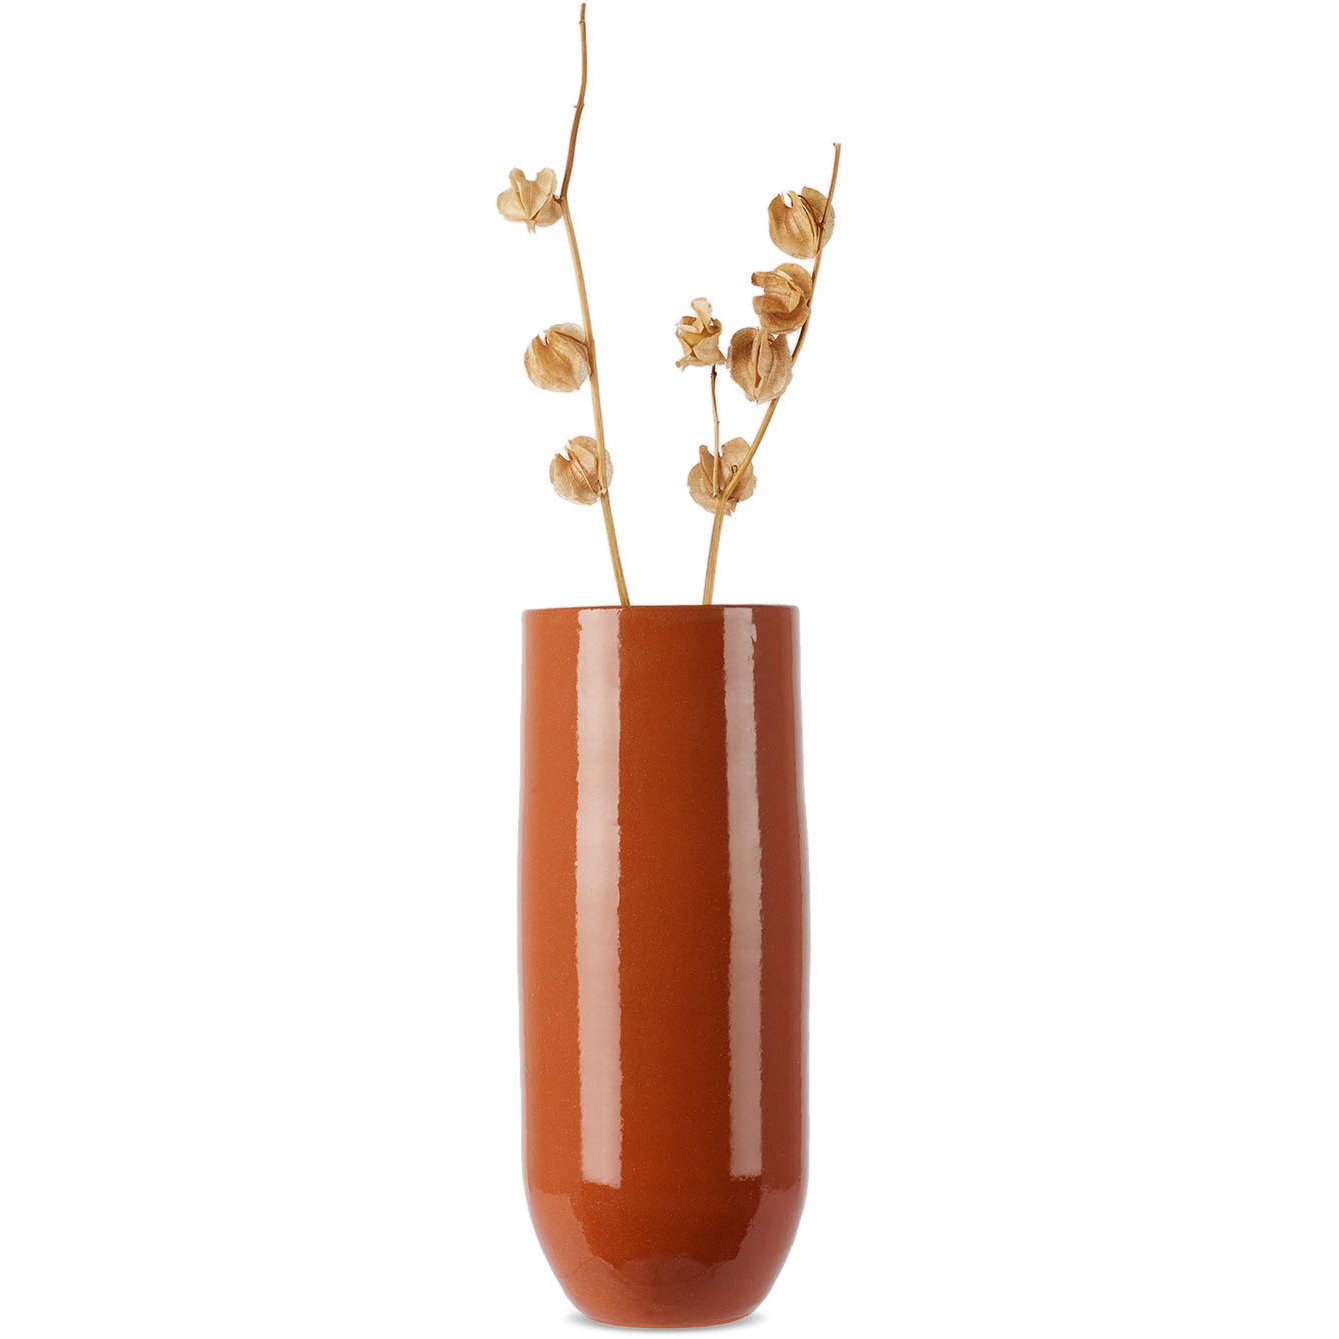 BASIS Orange Type A Vase - image 1